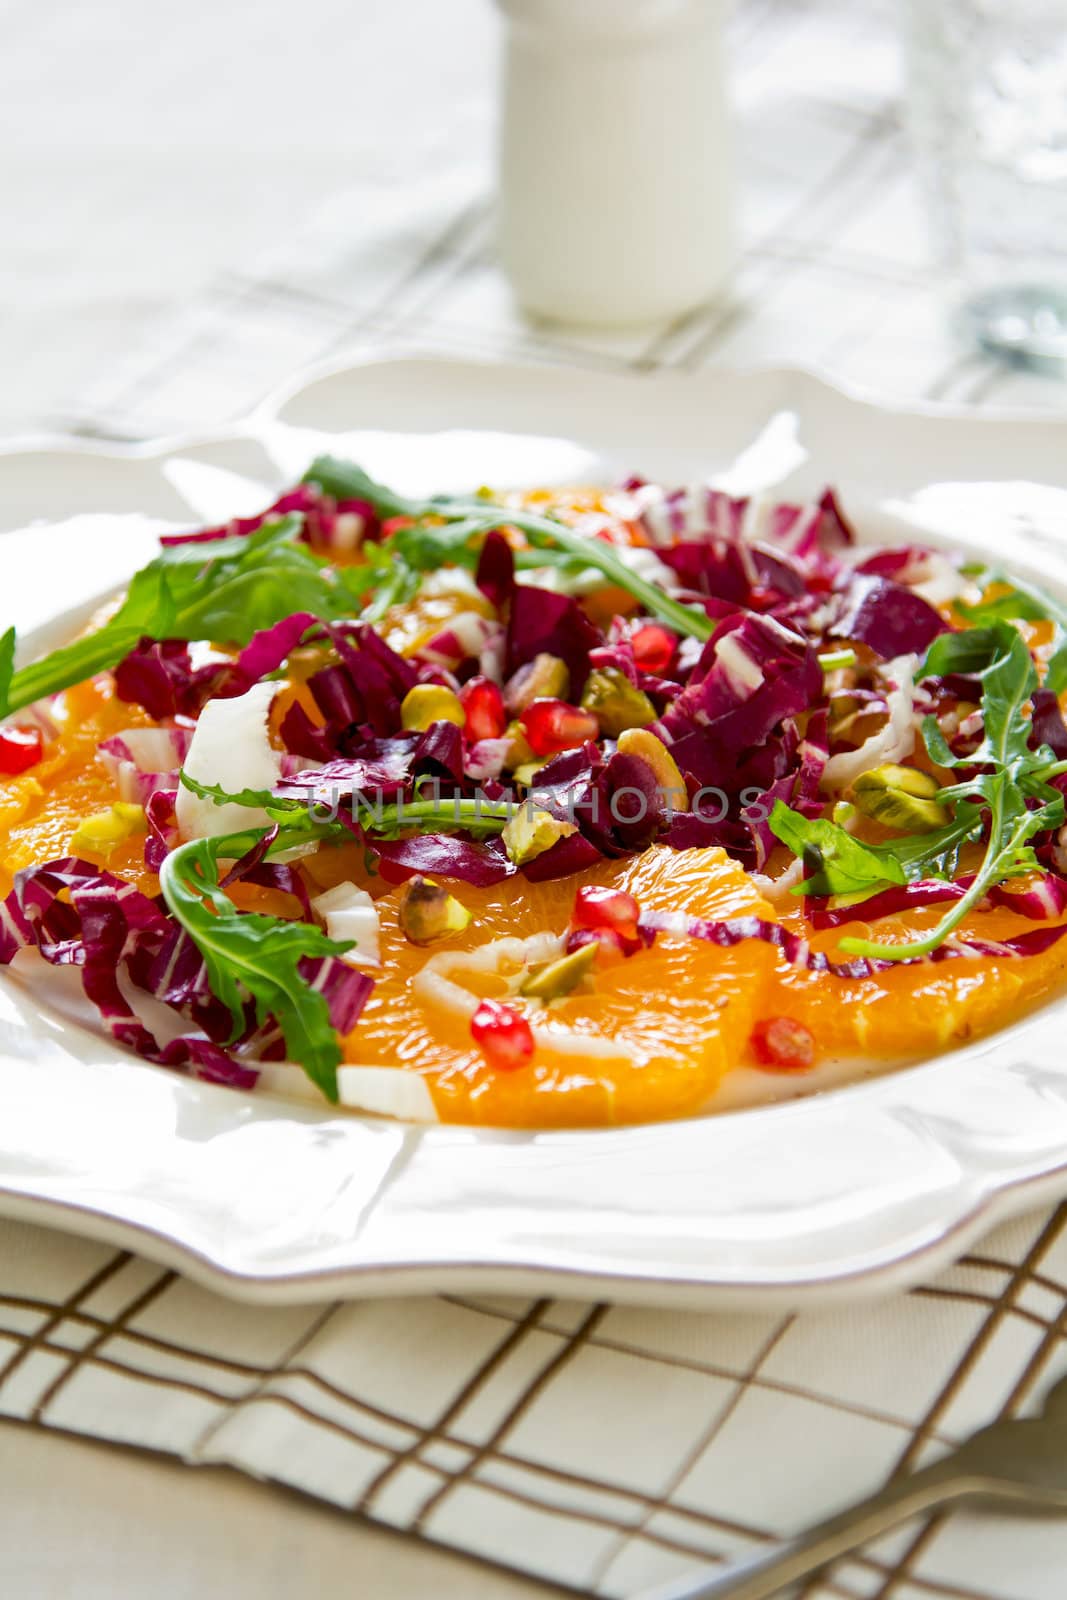 Orange with Radicchio and Pomegranate salad by vanillaechoes